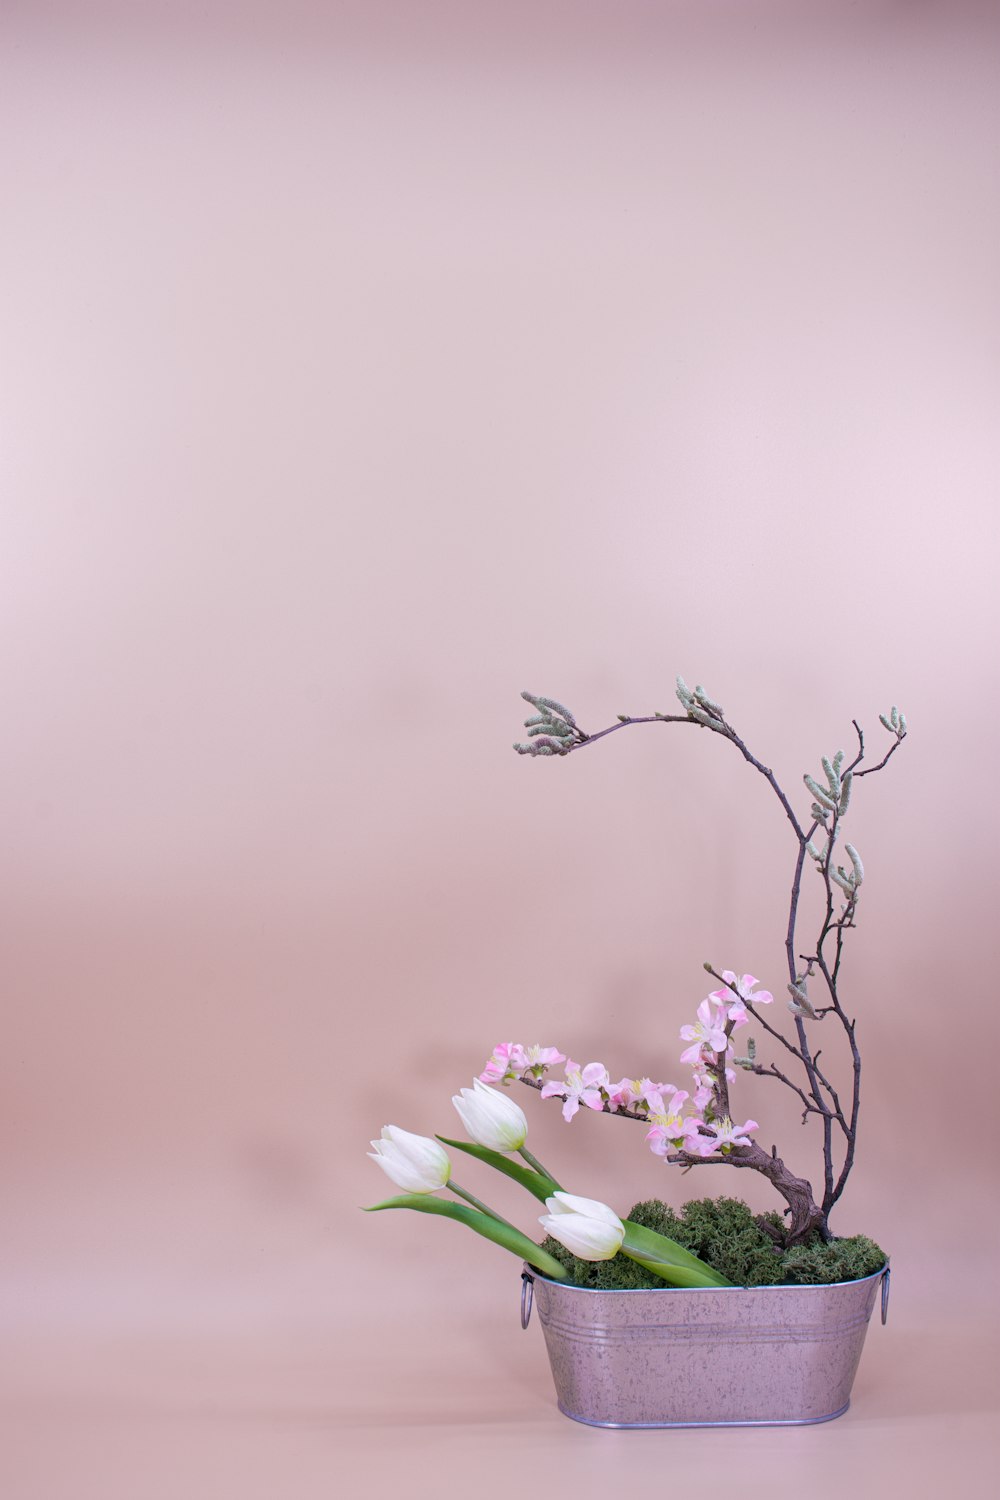 fiori viola in lente tilt shift